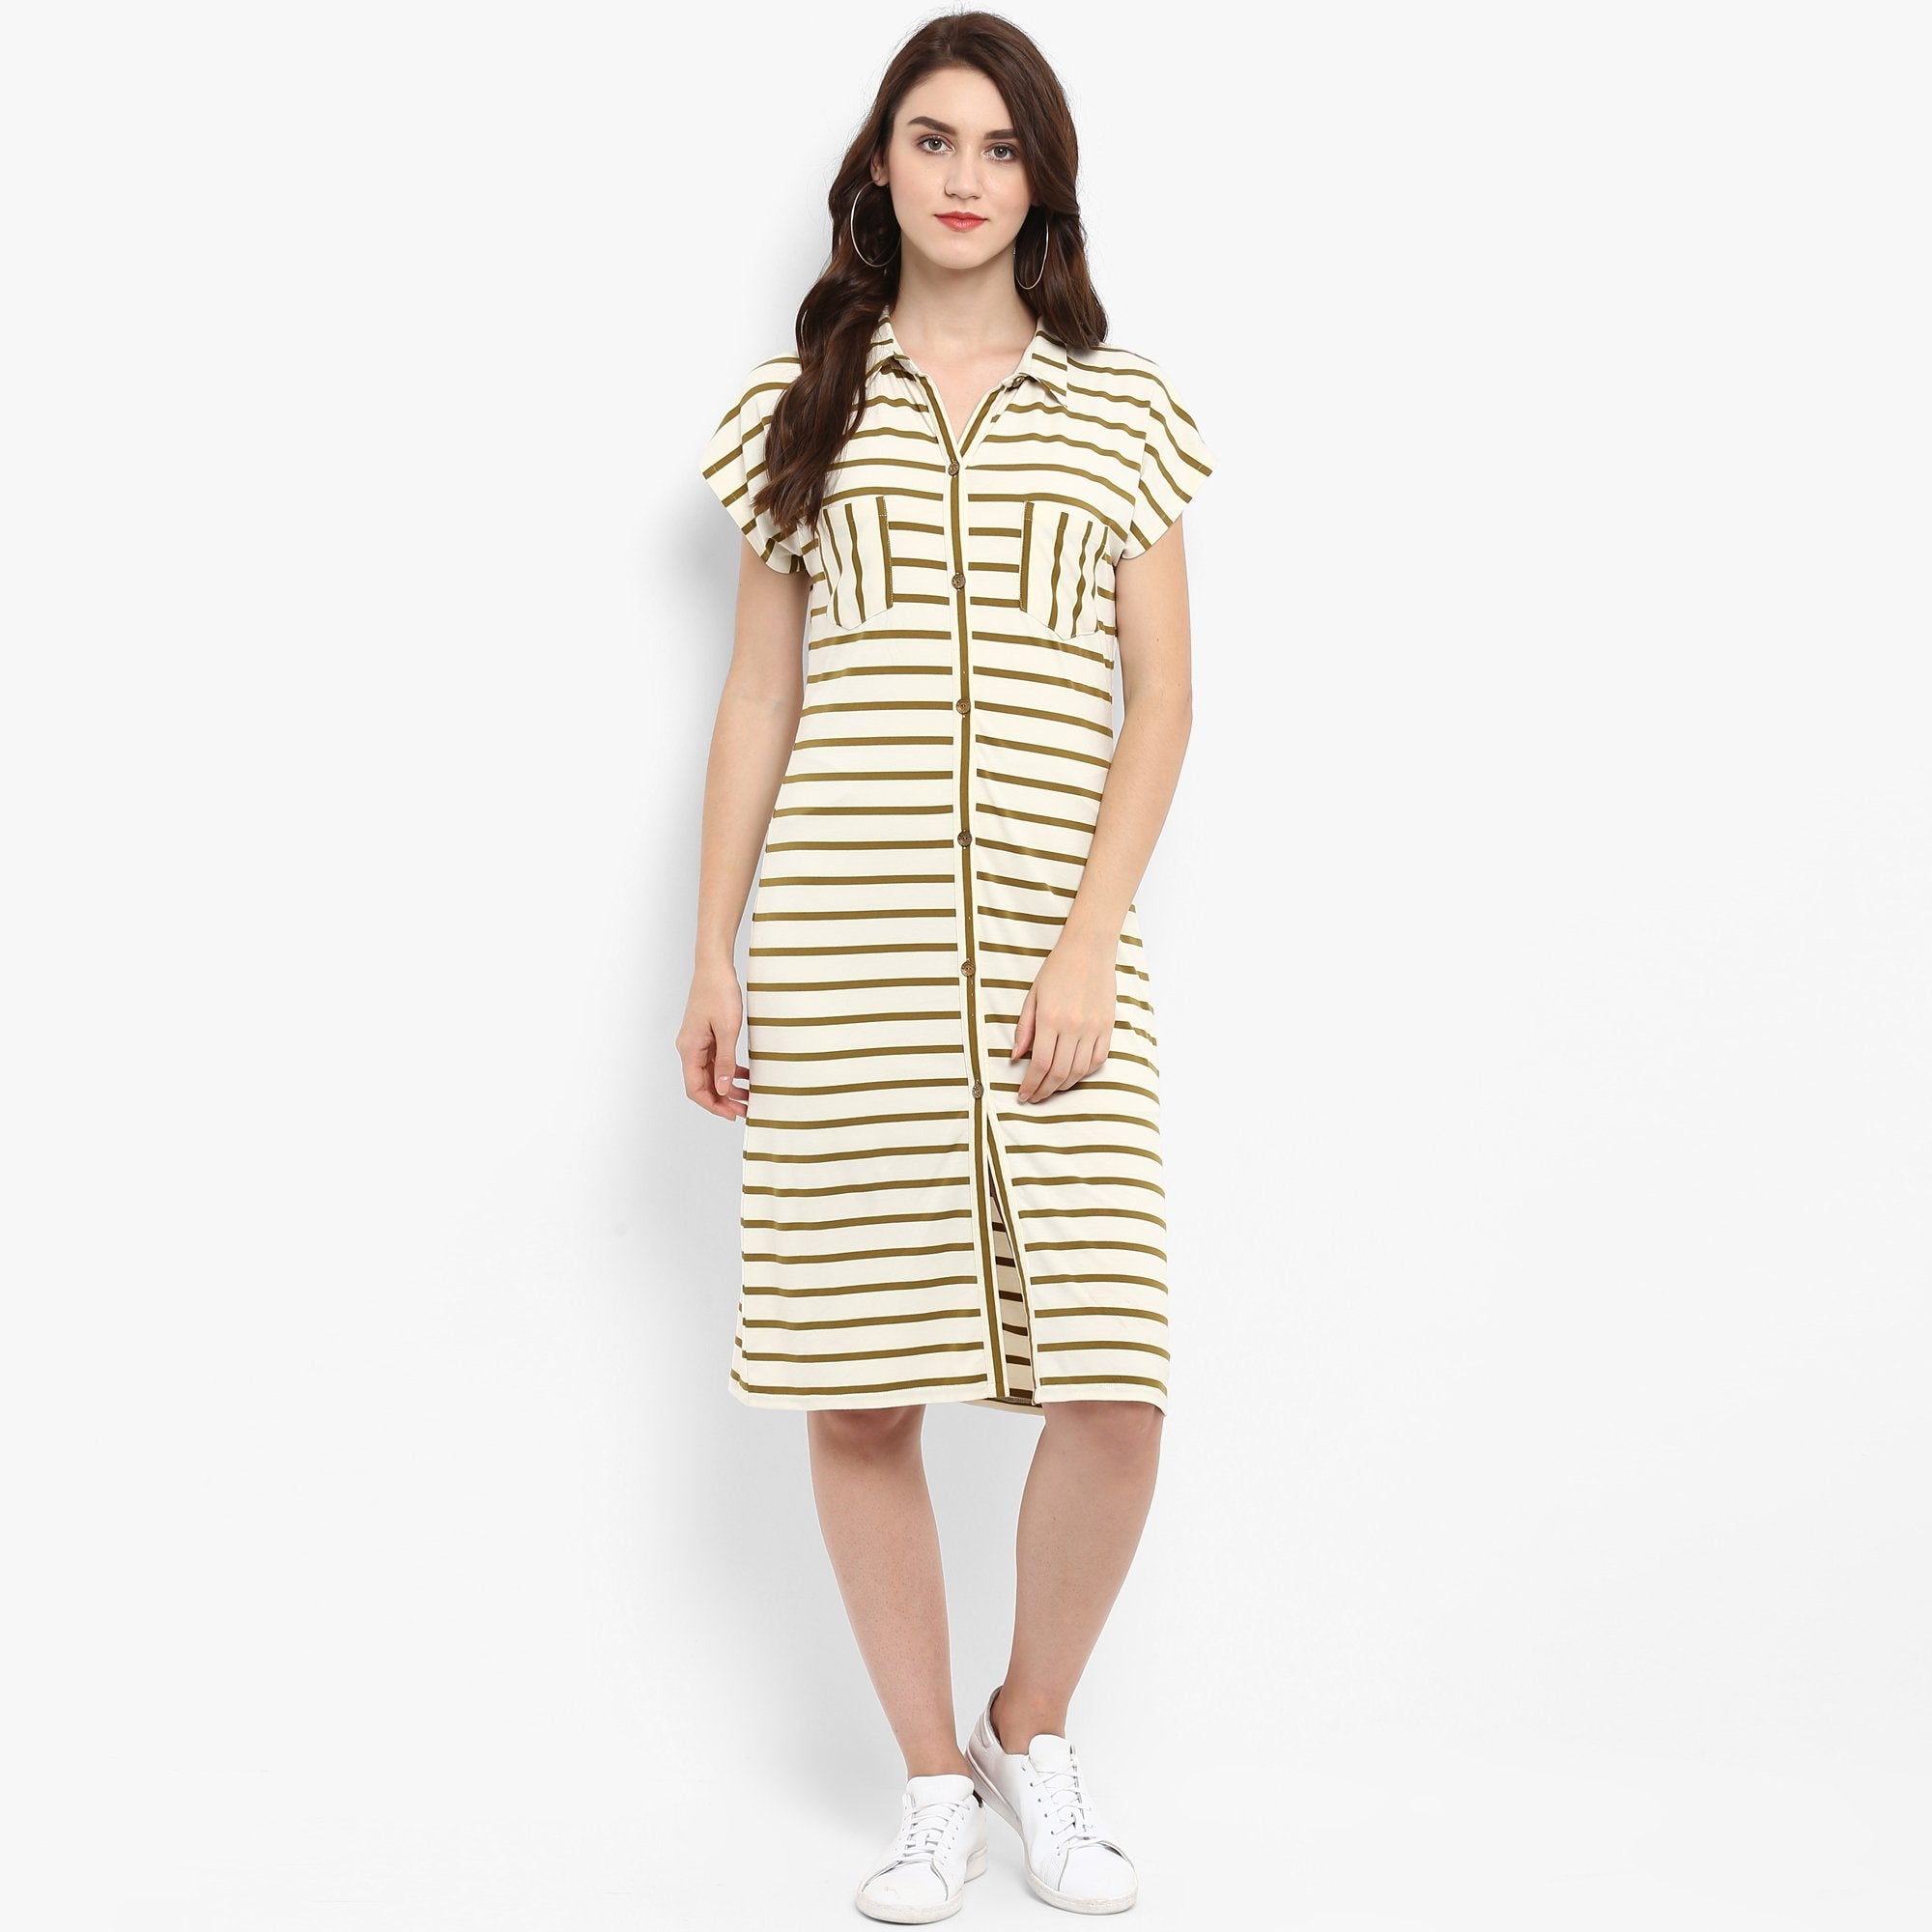 Women's Knitted Stripe Dress - Pannkh